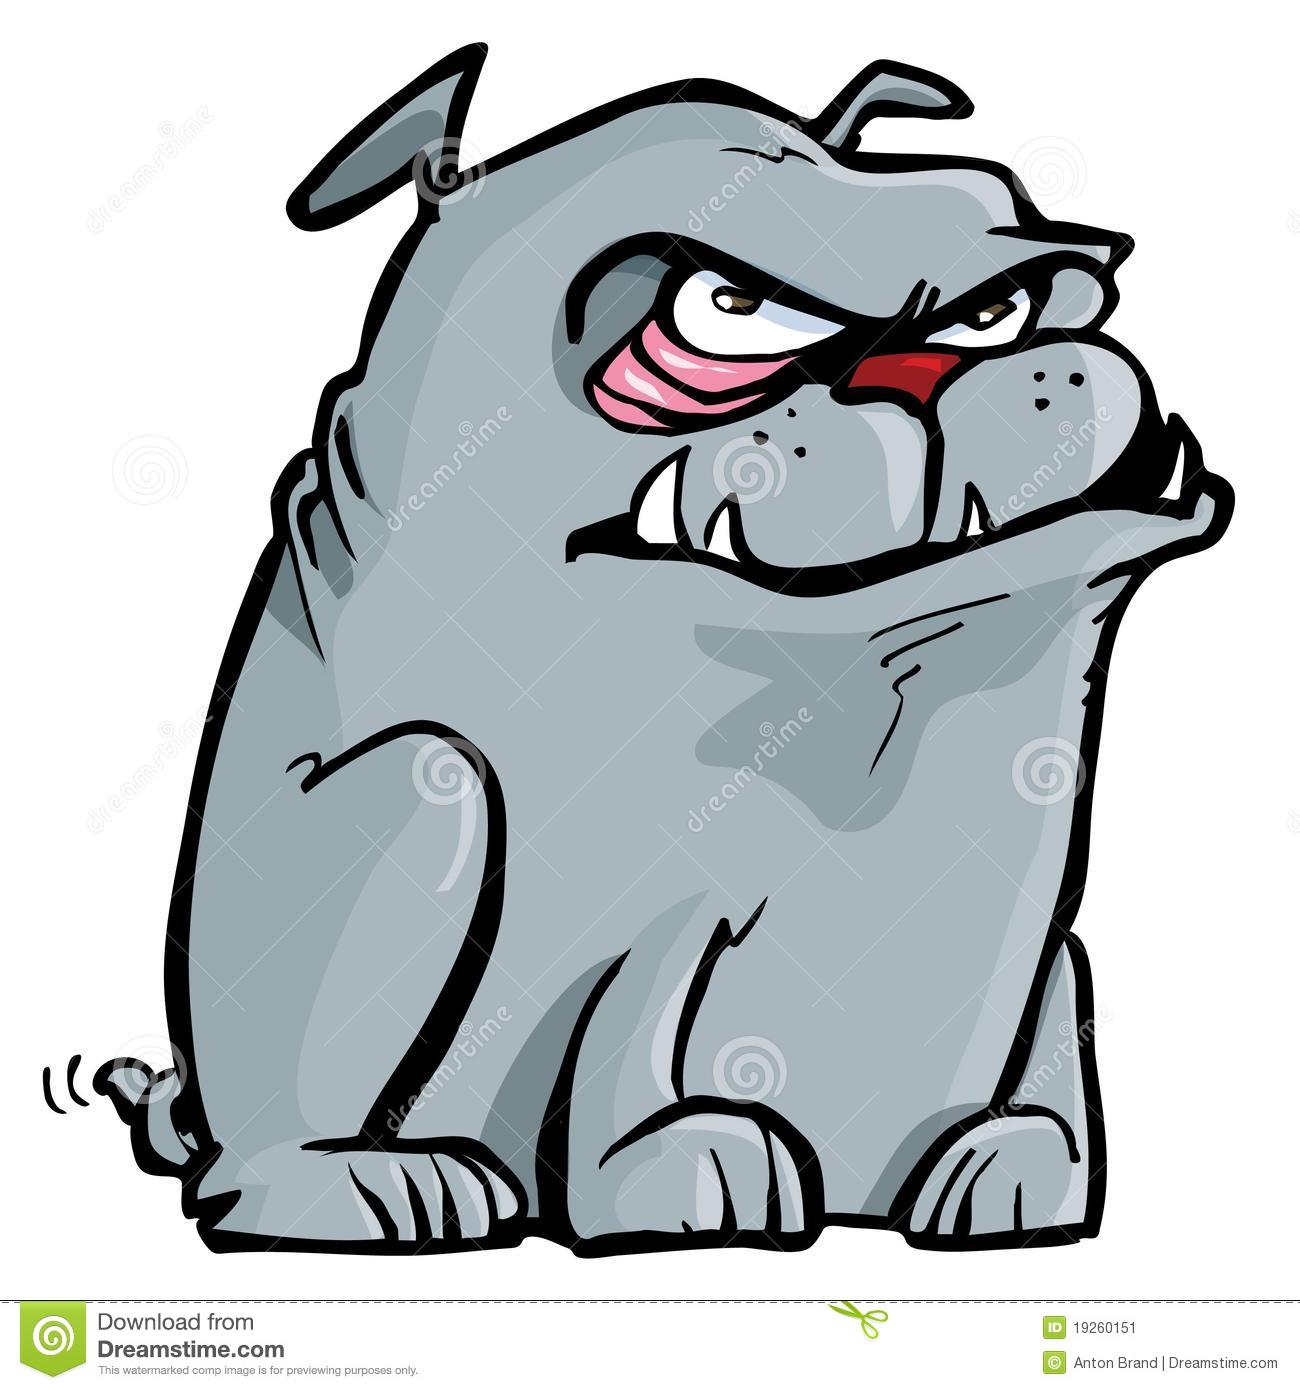 More Similar Stock Images Of   Cartoon Of Mean Bulldog